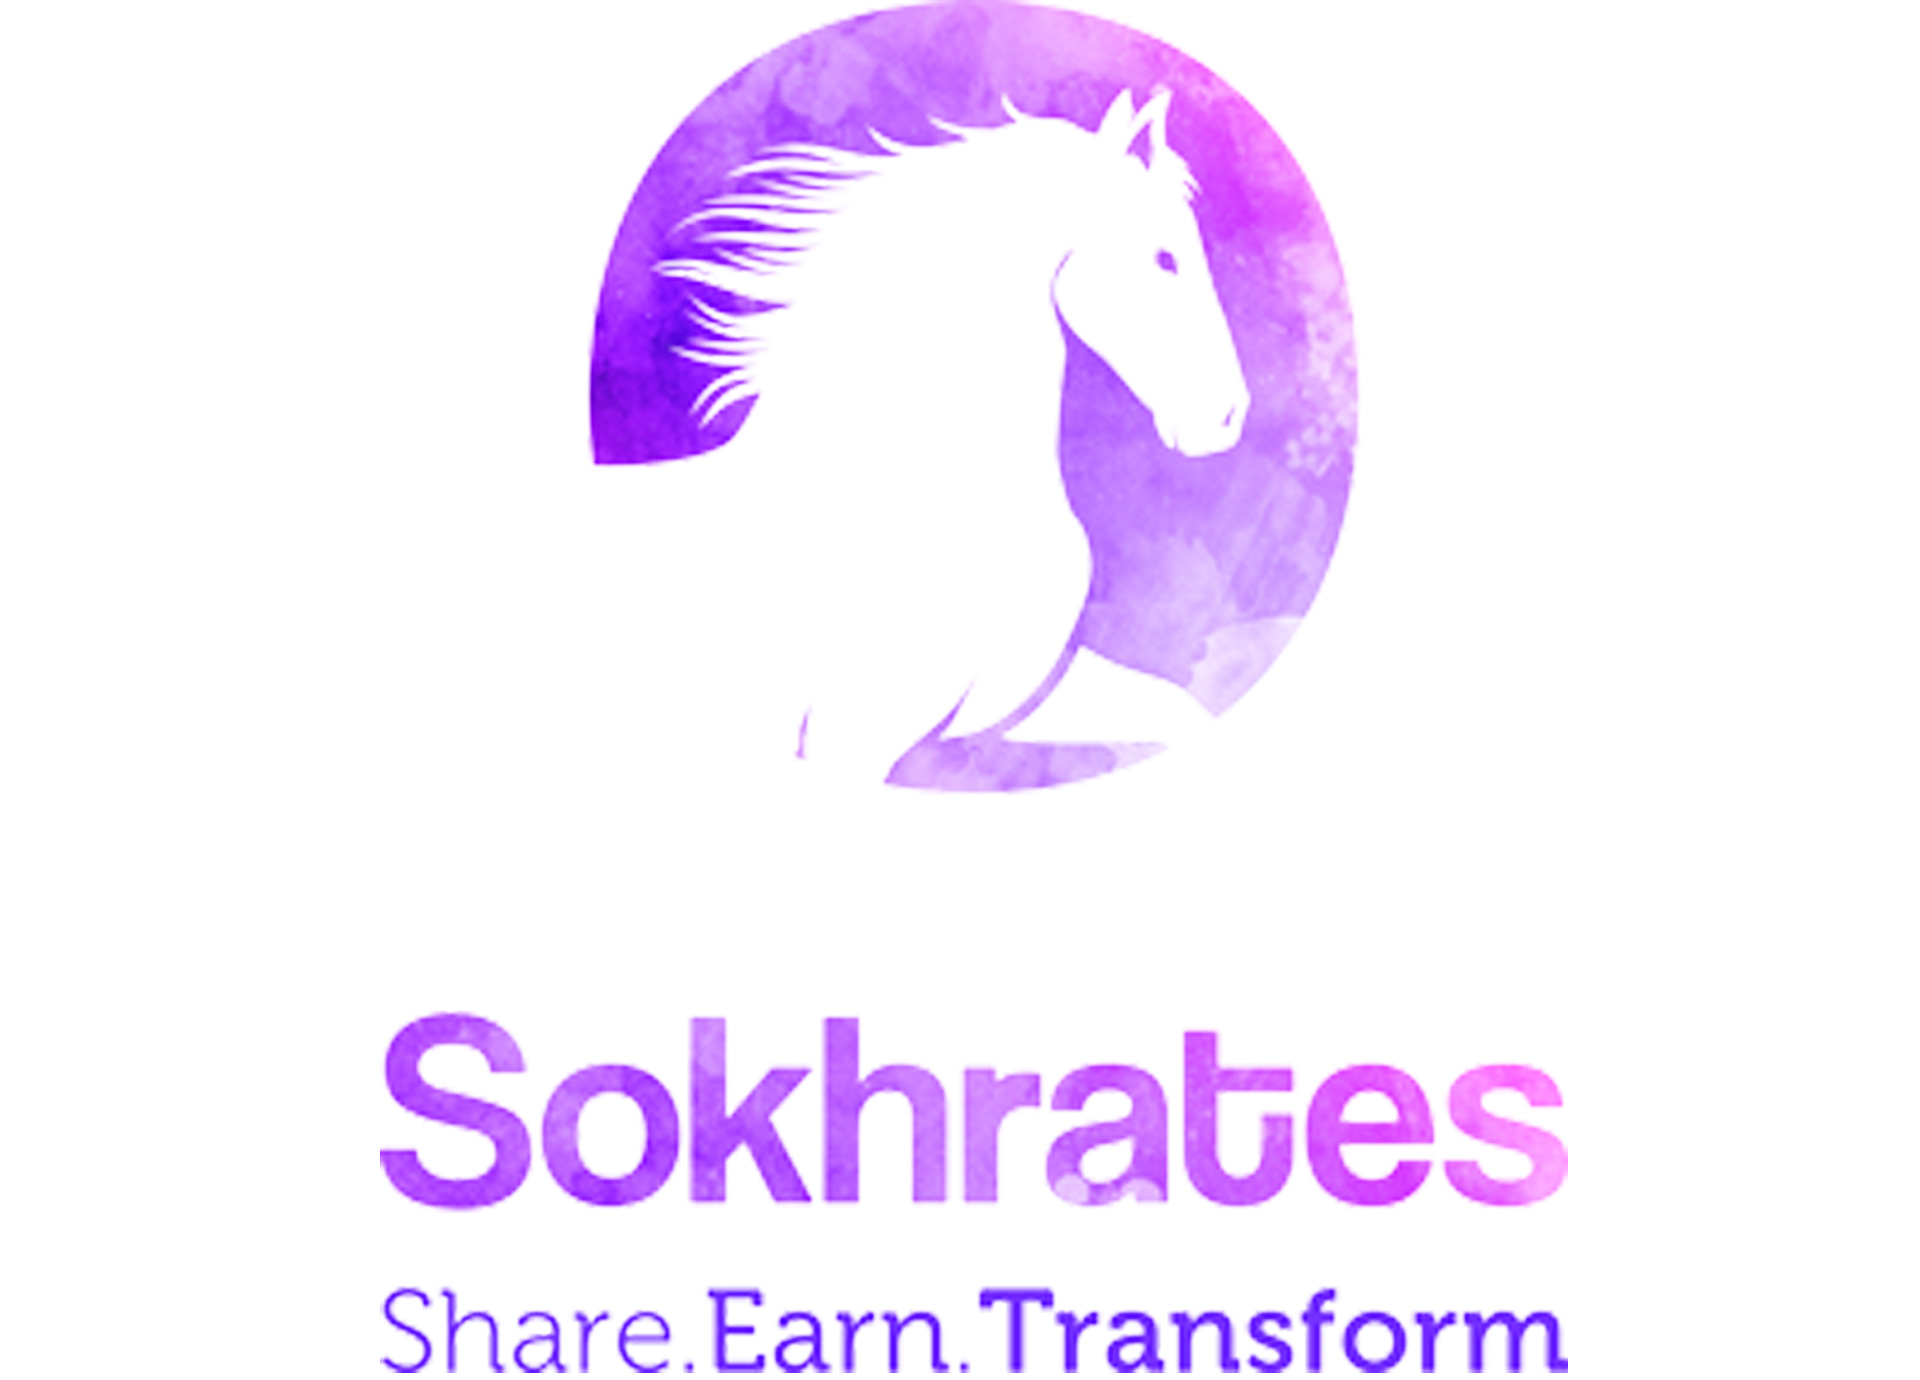 Sokhrates, la red social que quiere salvar al planeta